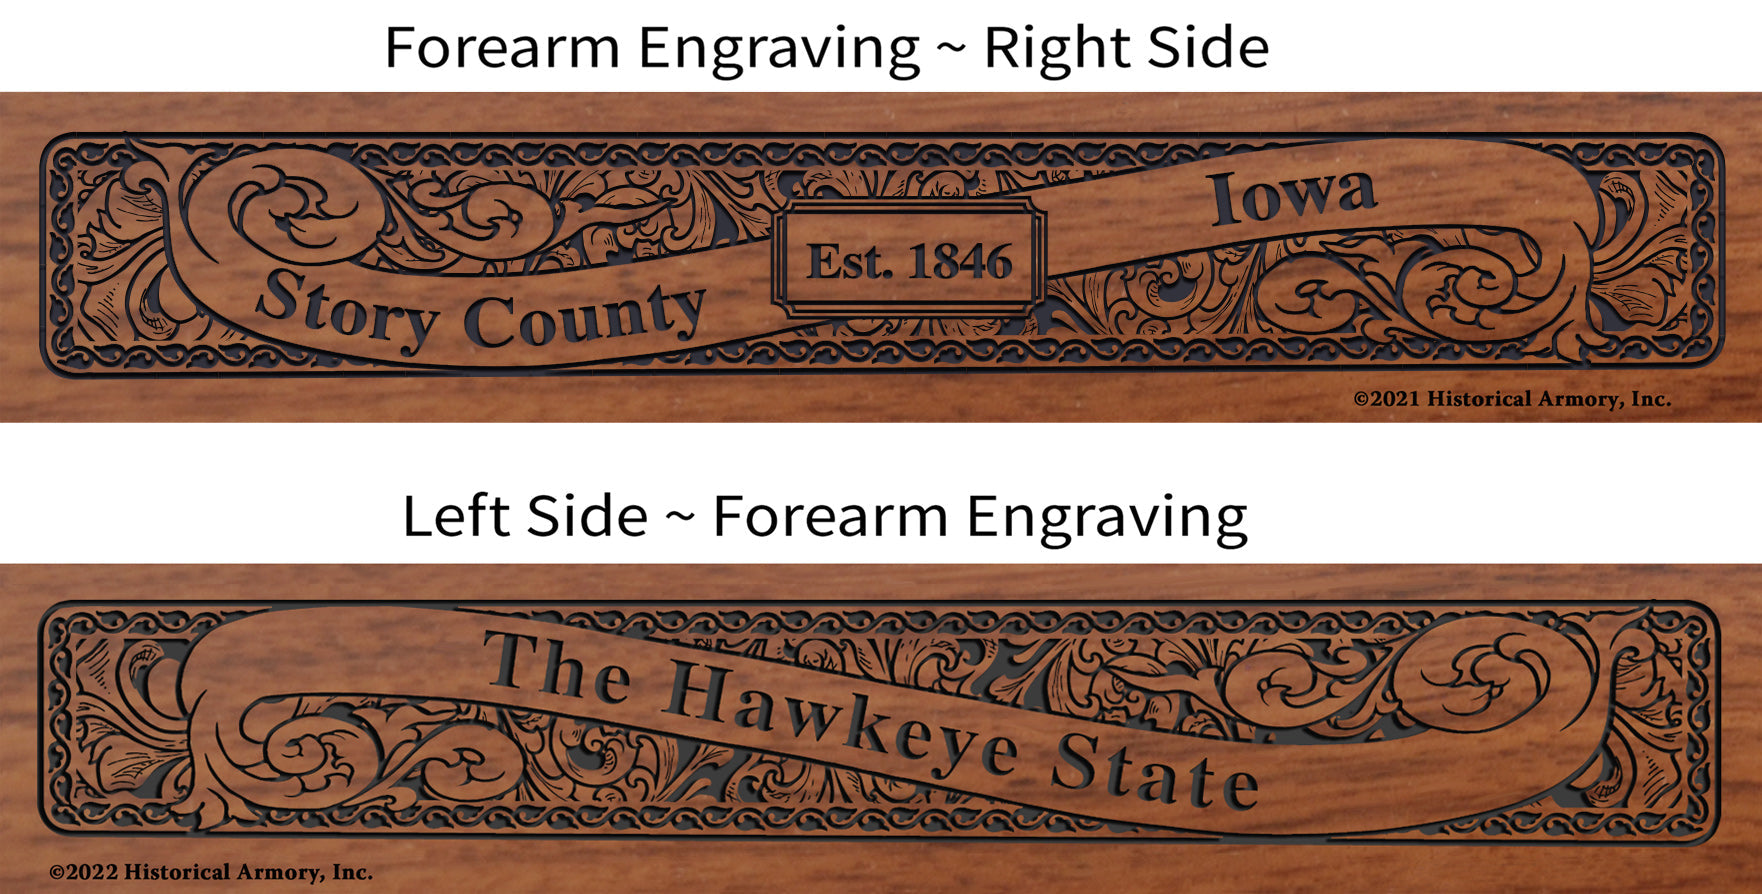 Story County Iowa Engraved Rifle Forearm